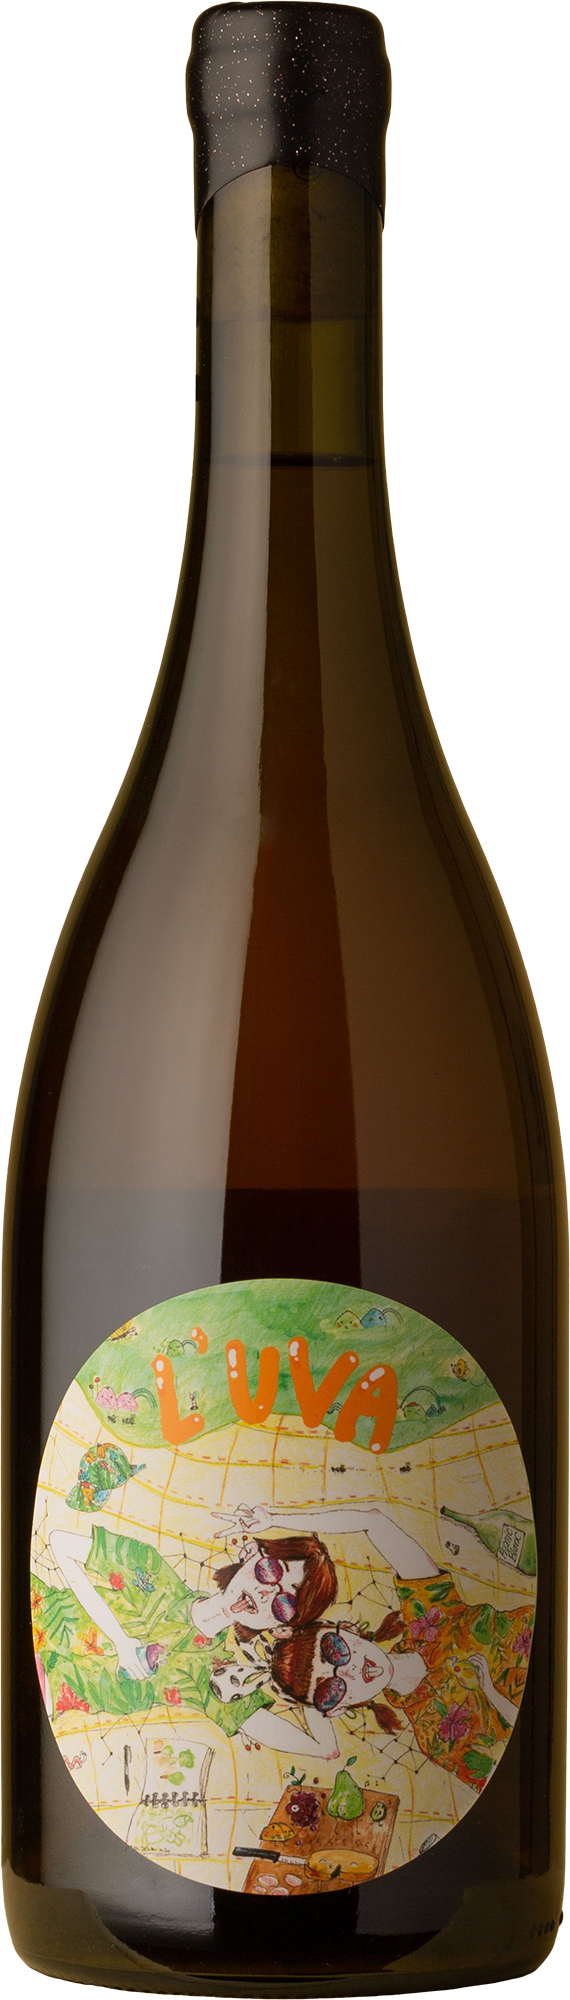 L'Uva - Picnic Blanc Semillon 2019 White Wine